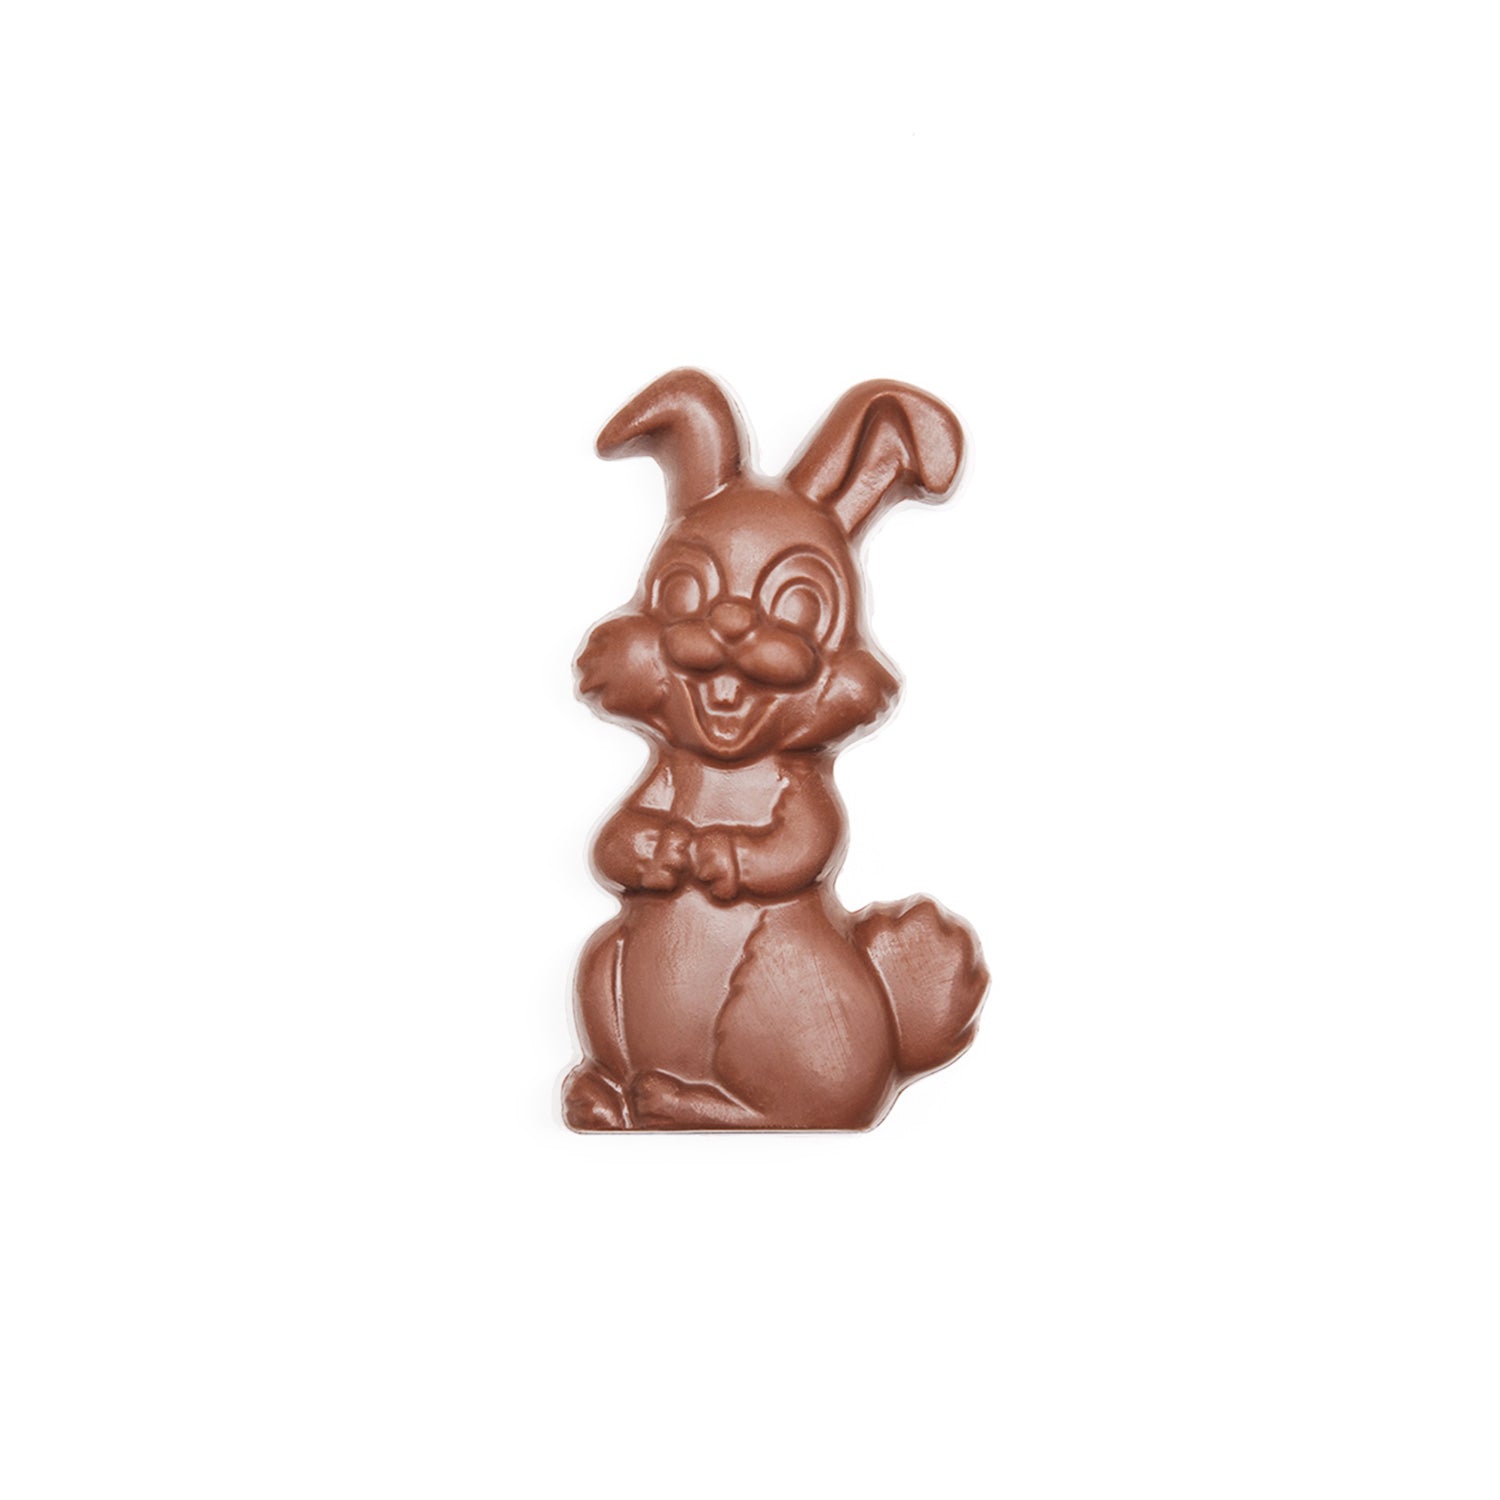 A cartoon bunny chocolate molding.